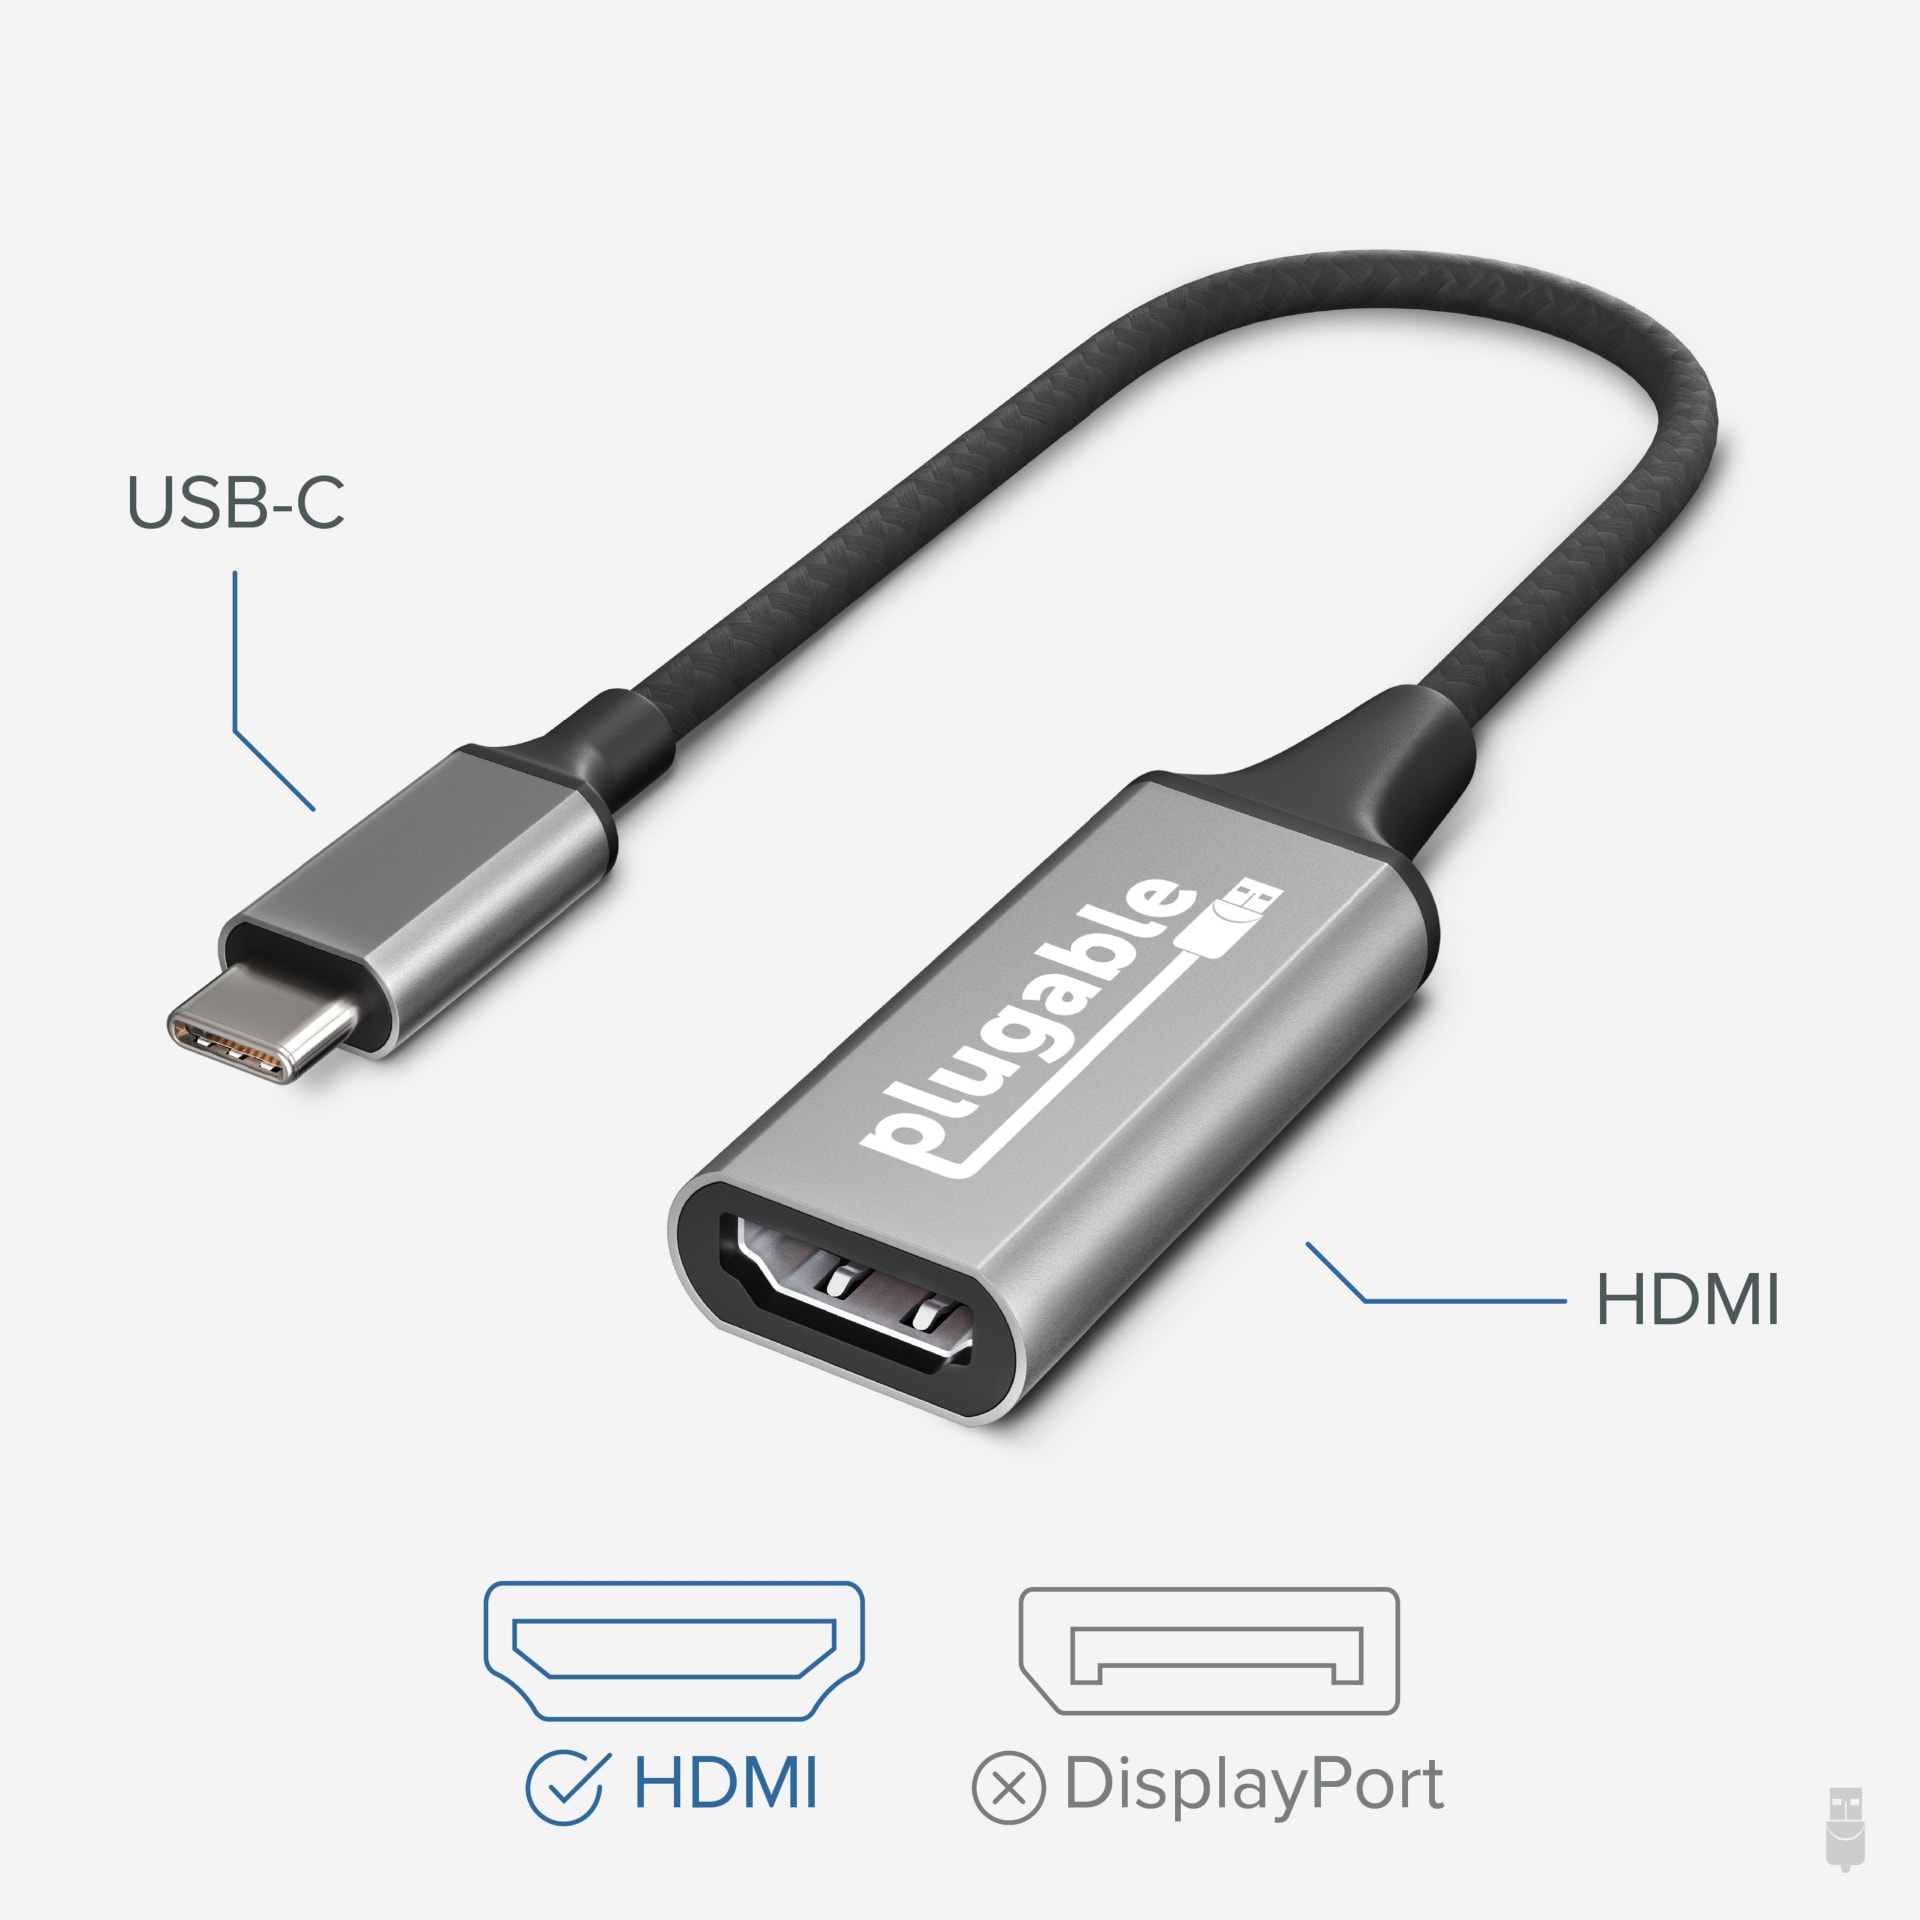 HP DisplayPort to HDMI 1.4 Adapter - HP Store UK